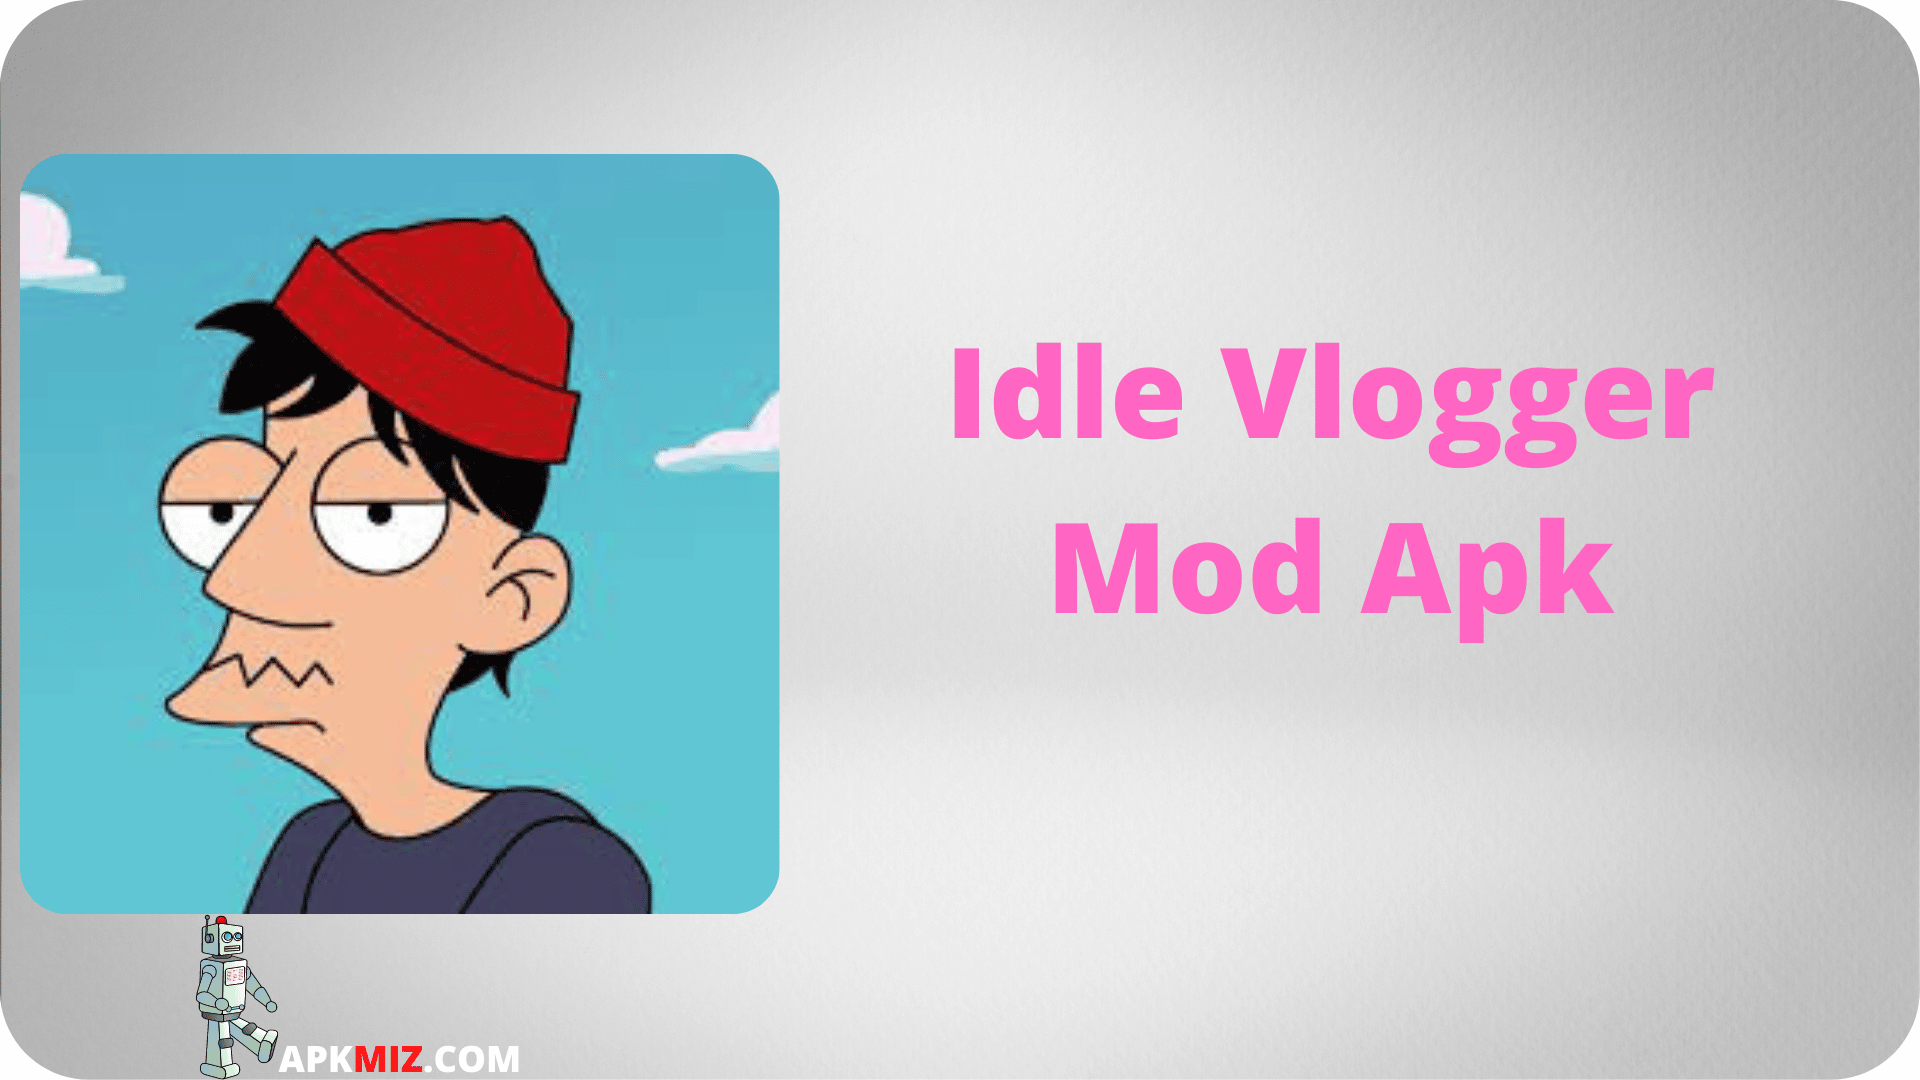 Idle Vlogger Mod Apk